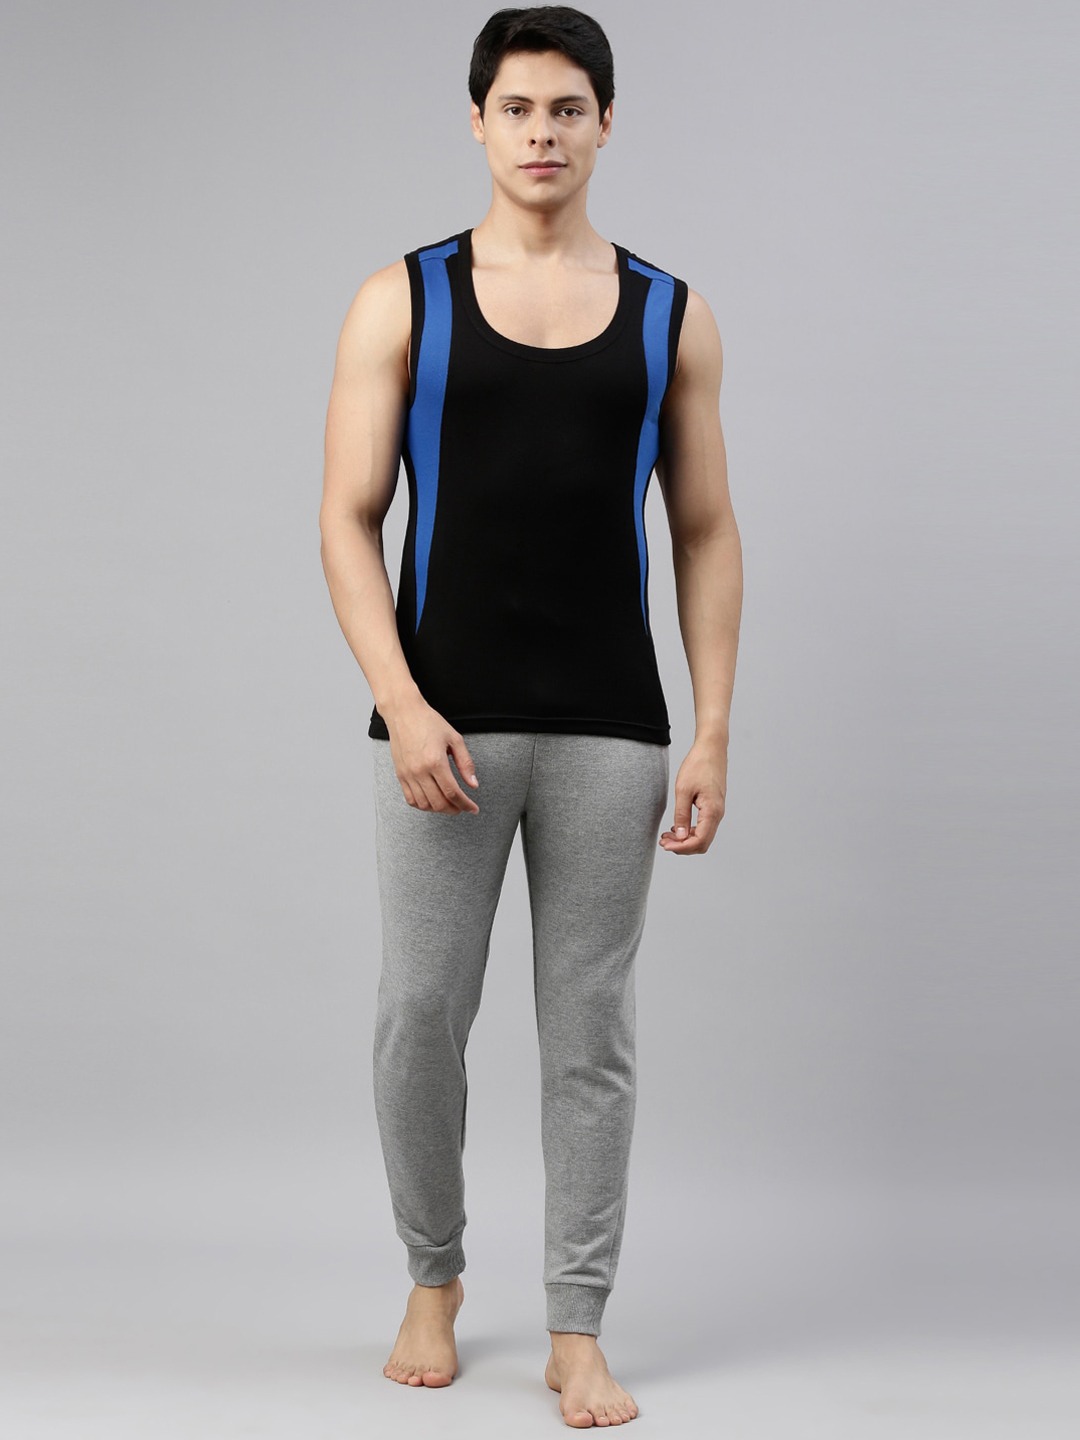 Clothing Innerwear Vests | DIXCY SCOTT Men Pack Of 2 Black & Red Solid Cotton Gym Vests - YN64072